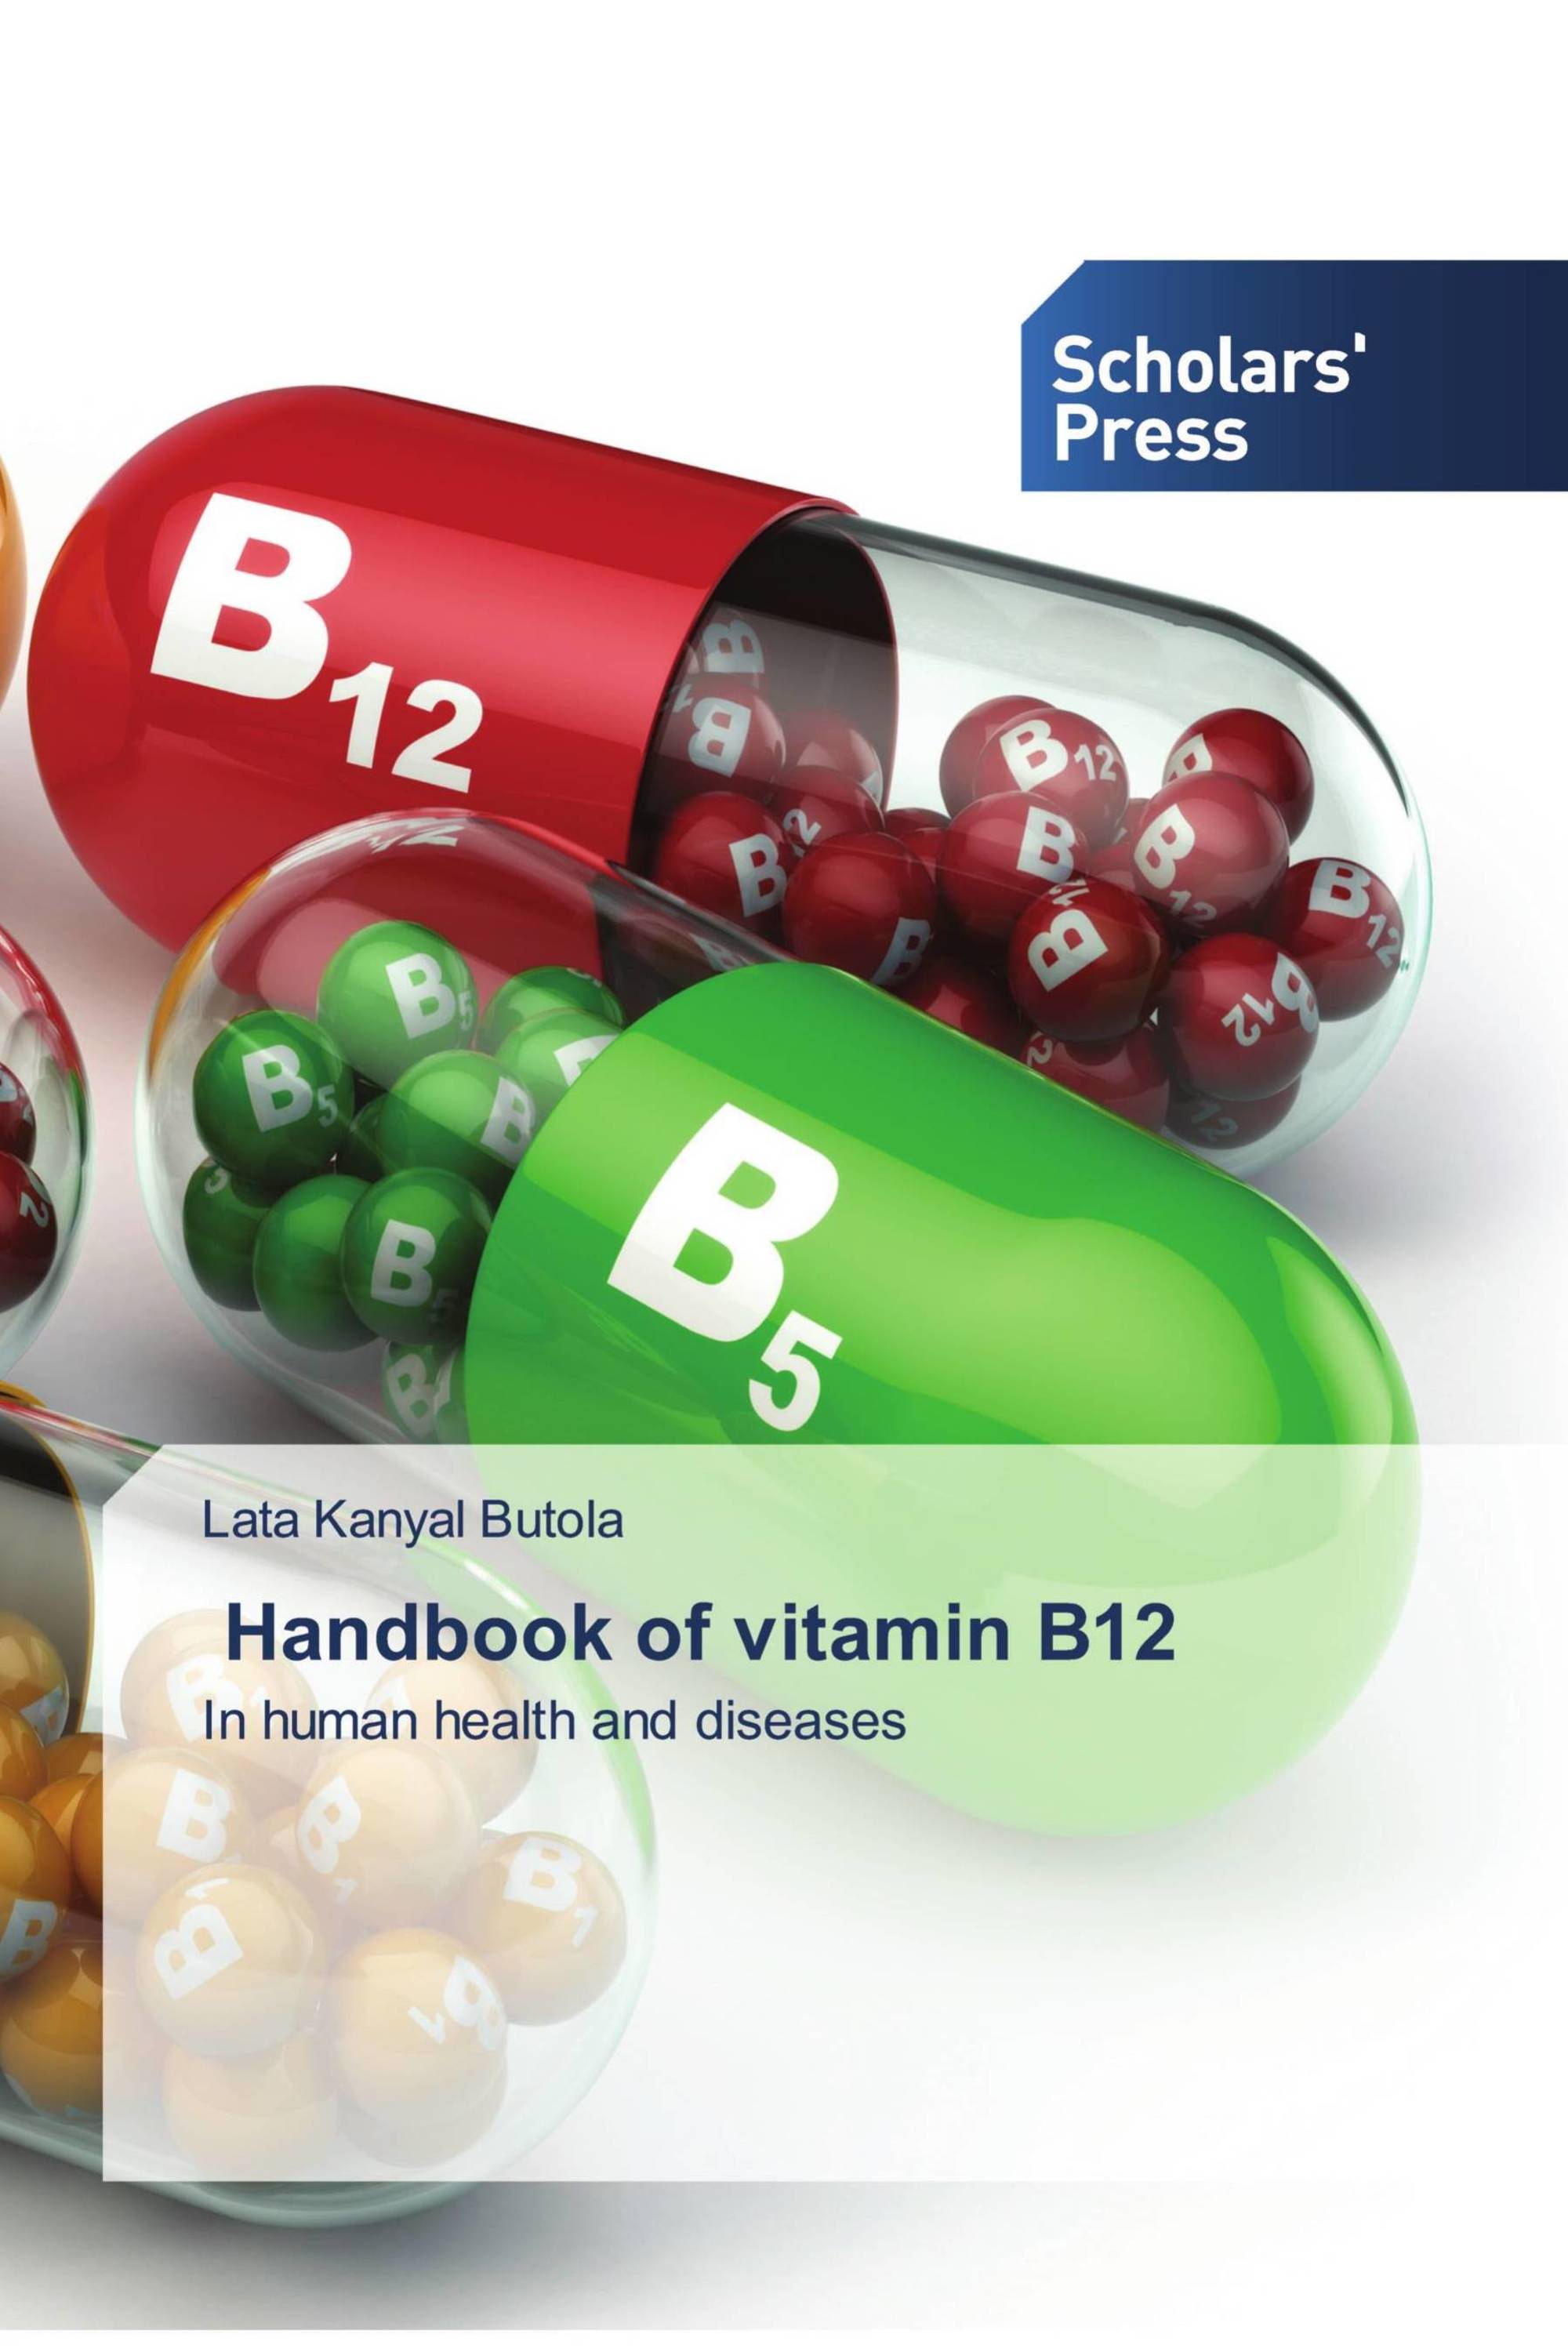 Chemistry of Vitamin B12 (Cyanocobalamin) - Biochemical Roles Vitamin B12